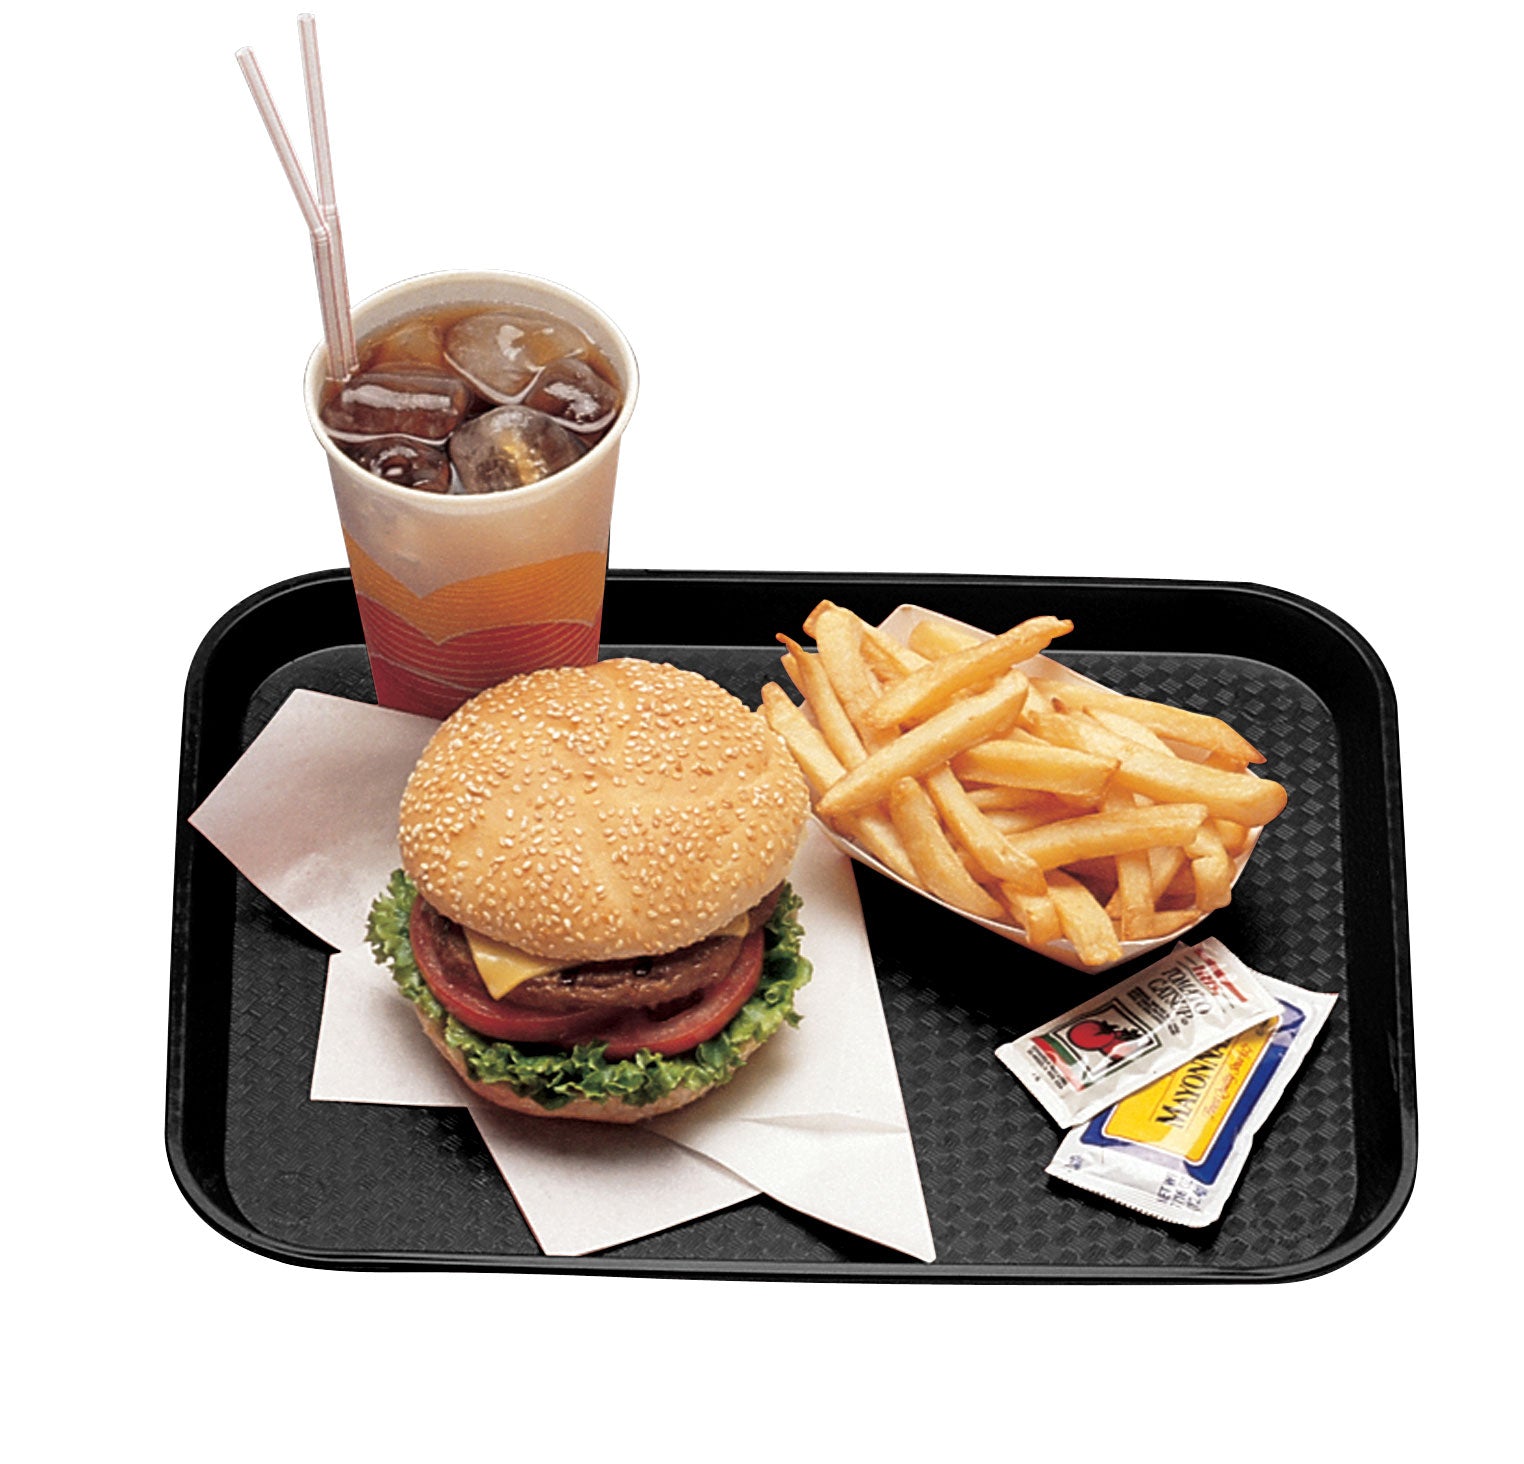 Cambro Fast Food Tablett, rechteckig – hohes Profil 26,5 x 34,5 cm, 24 Stück im Karton - 1014FF110